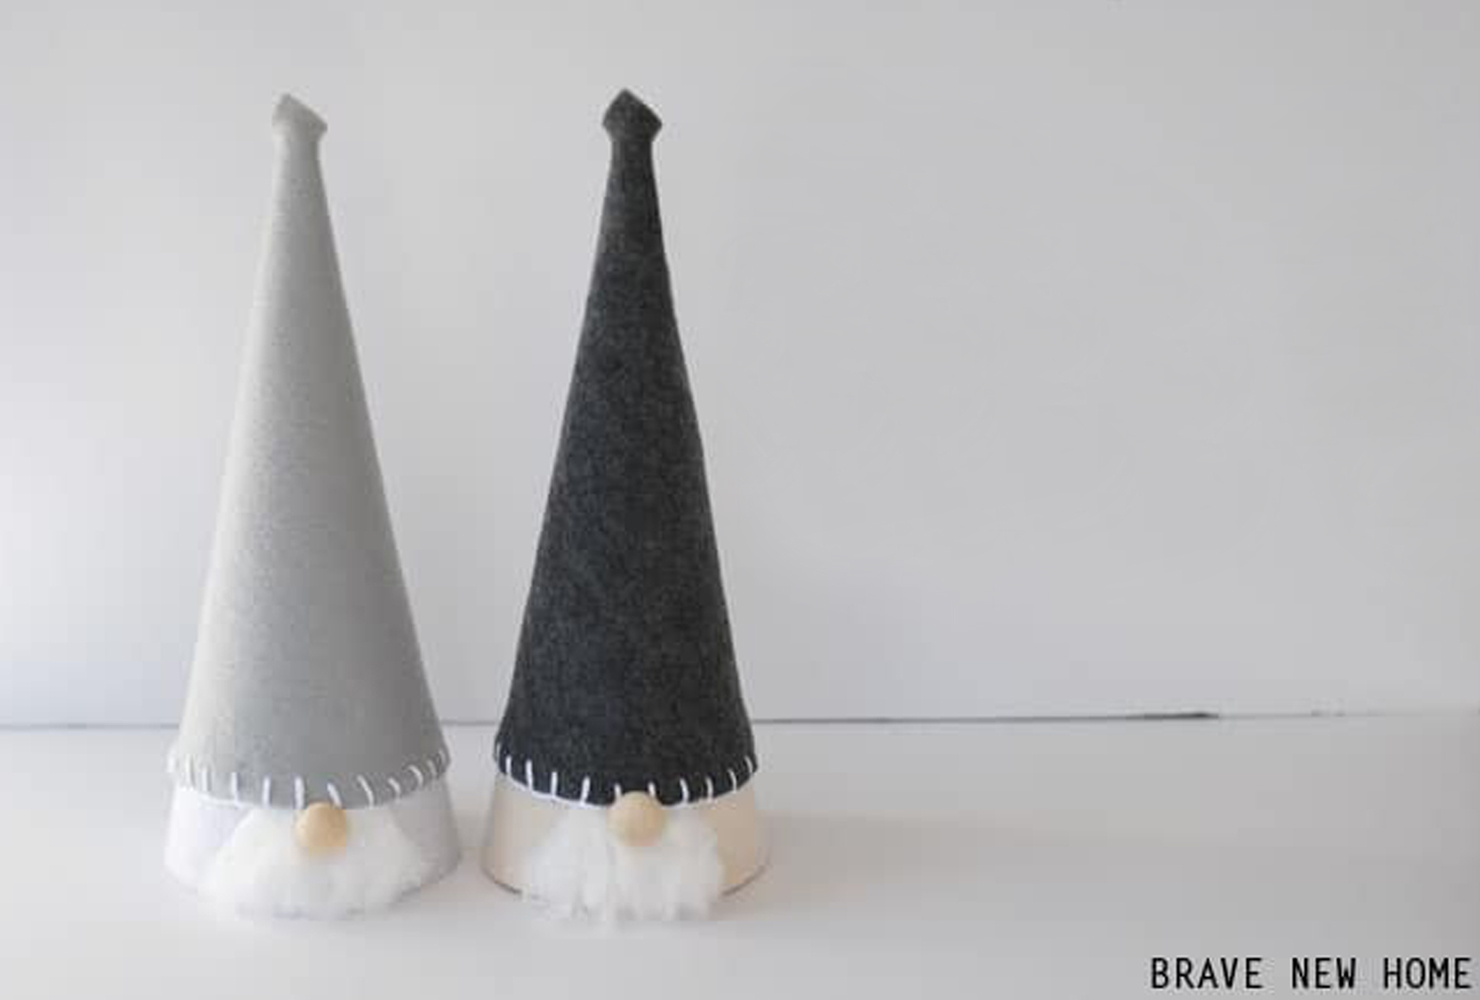  Nordic felt gnome with grey hat